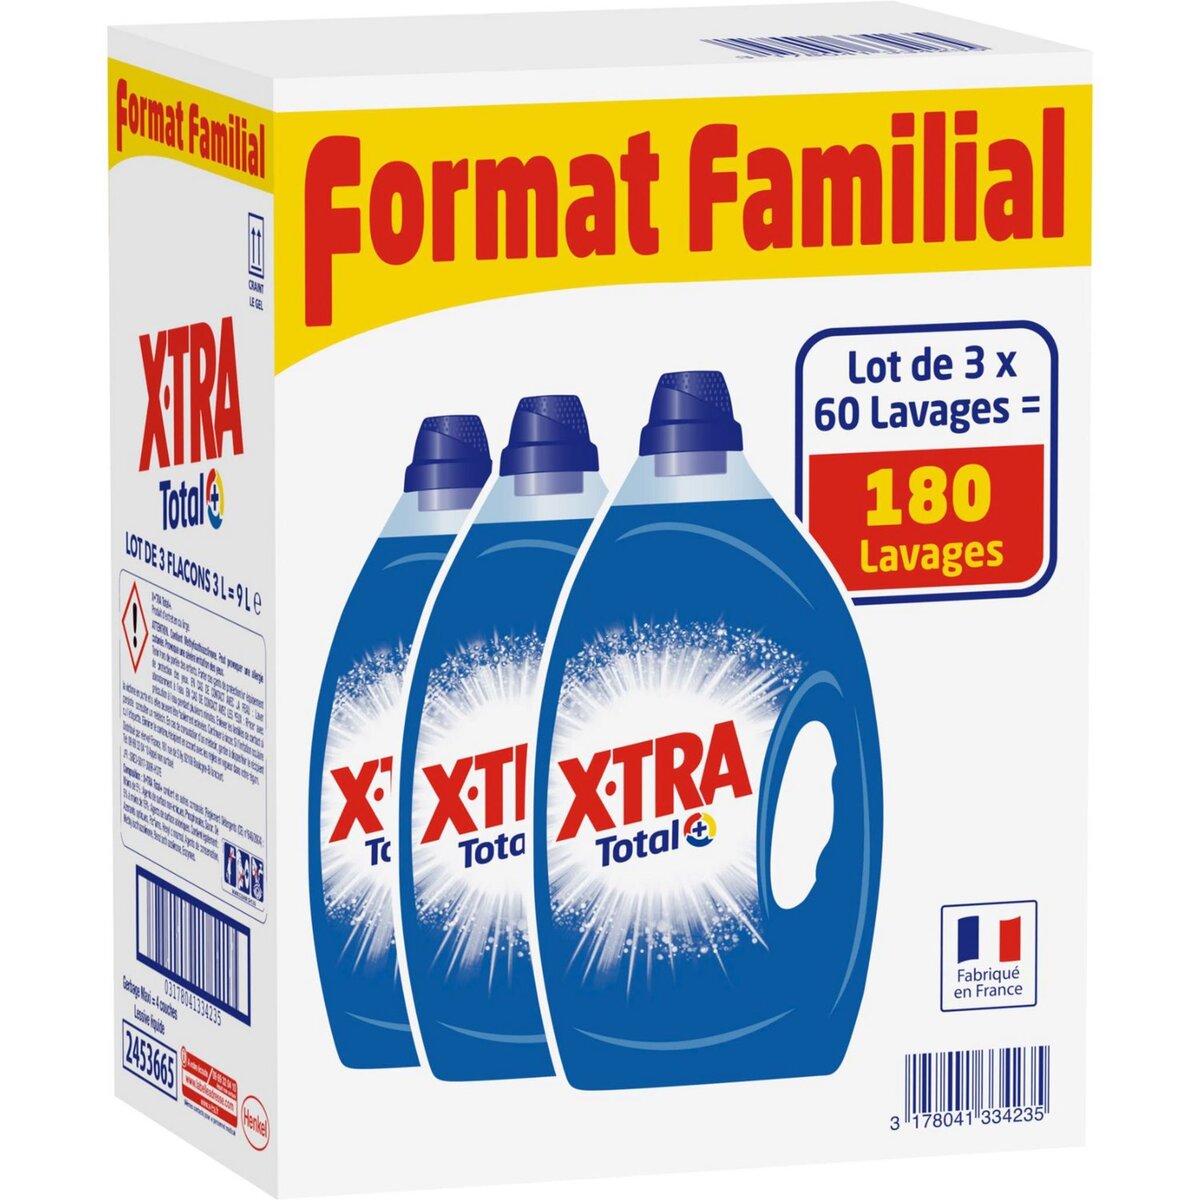 EXTRA Xtra lessive diluée total 90 lavages 3x3l lot familial